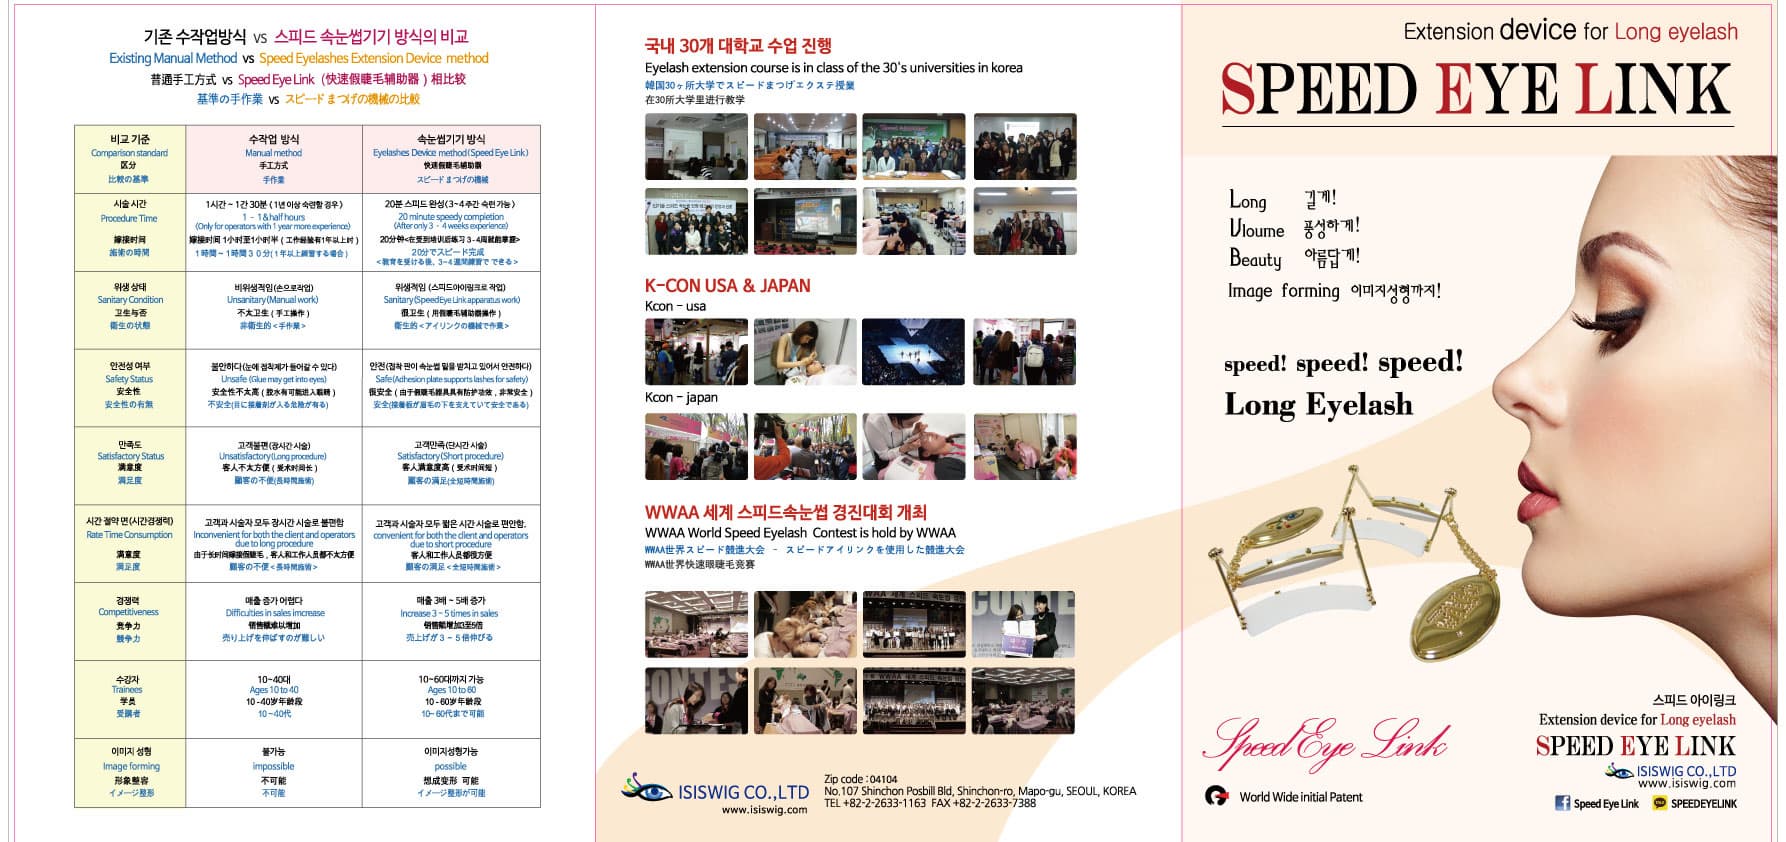 Speed eye link ( Speedy eyelashes extension tool) | tradekorea